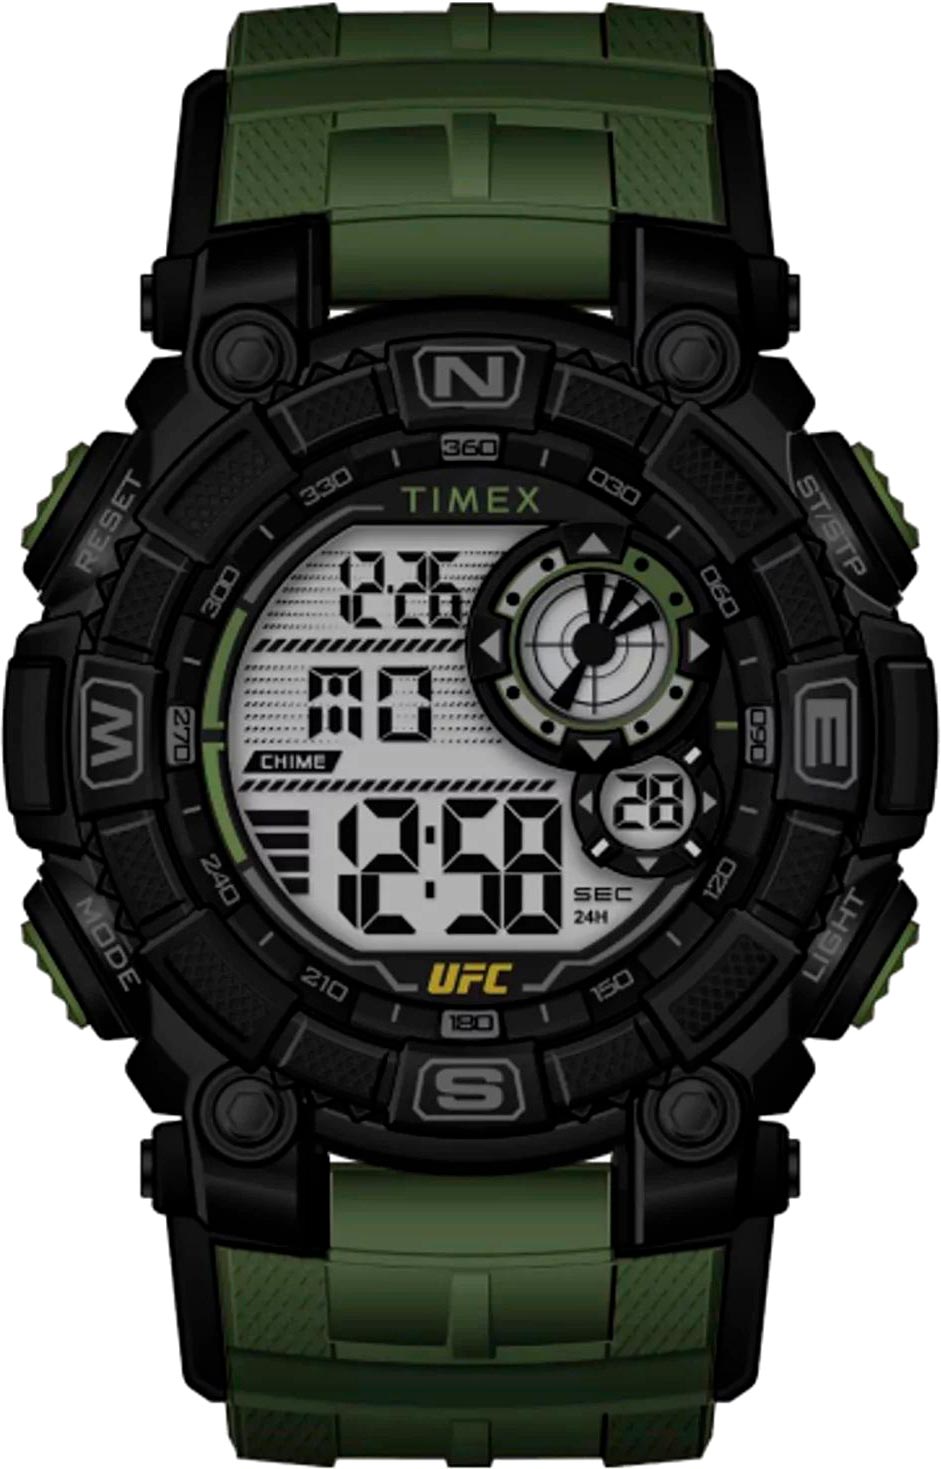   Timex UFC TW5M53900  